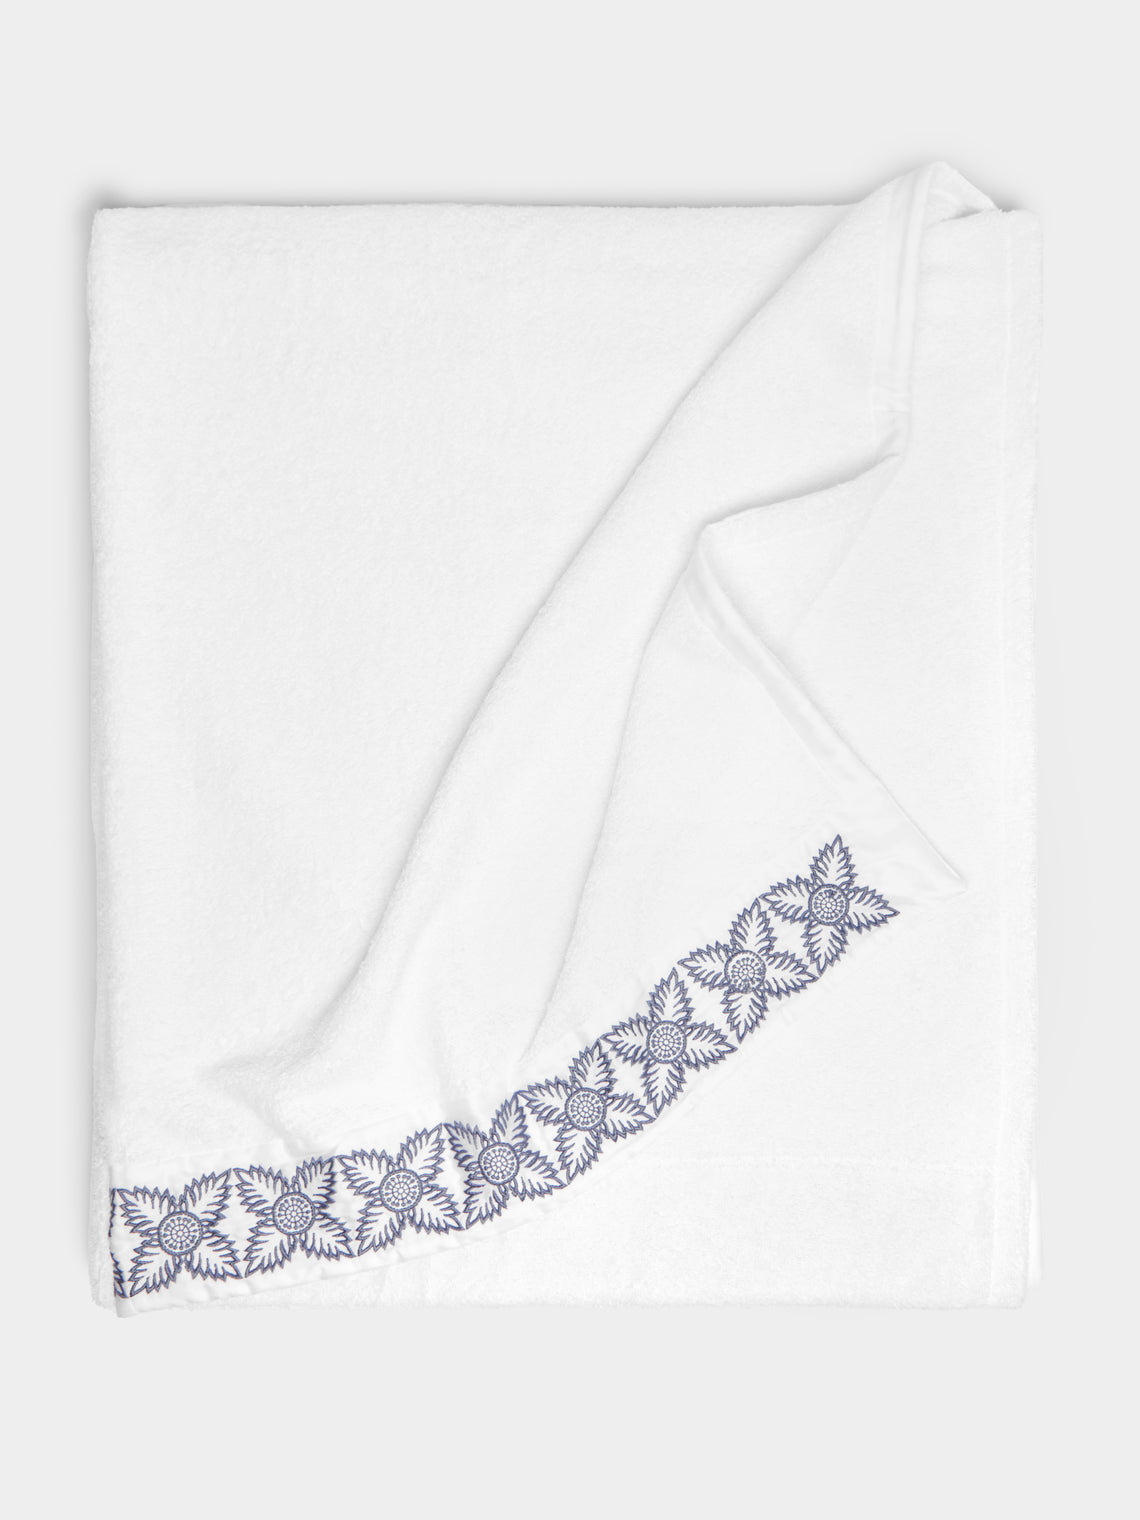 Loretta Caponi - Foliage Hand-Embroidered Cotton Bath Sheet -  - ABASK - 